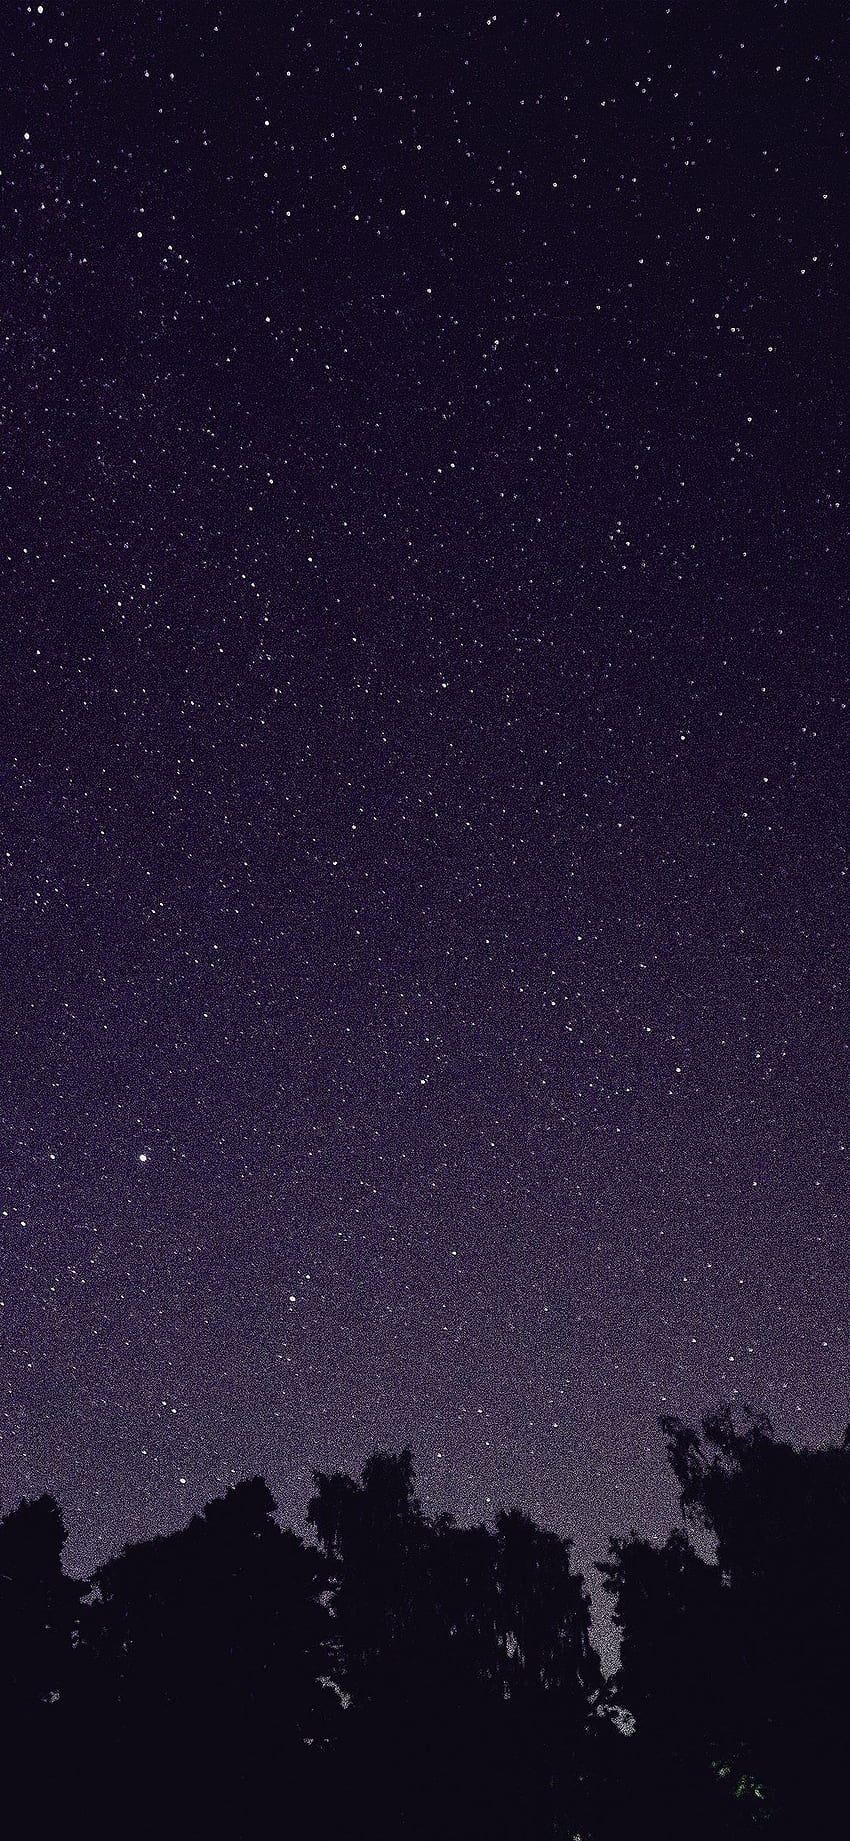 Com Apple iPhone Mt41 Starry Night Sky Star - Beau fond de nuit étoilée, belle galaxie Fond d'écran de téléphone HD